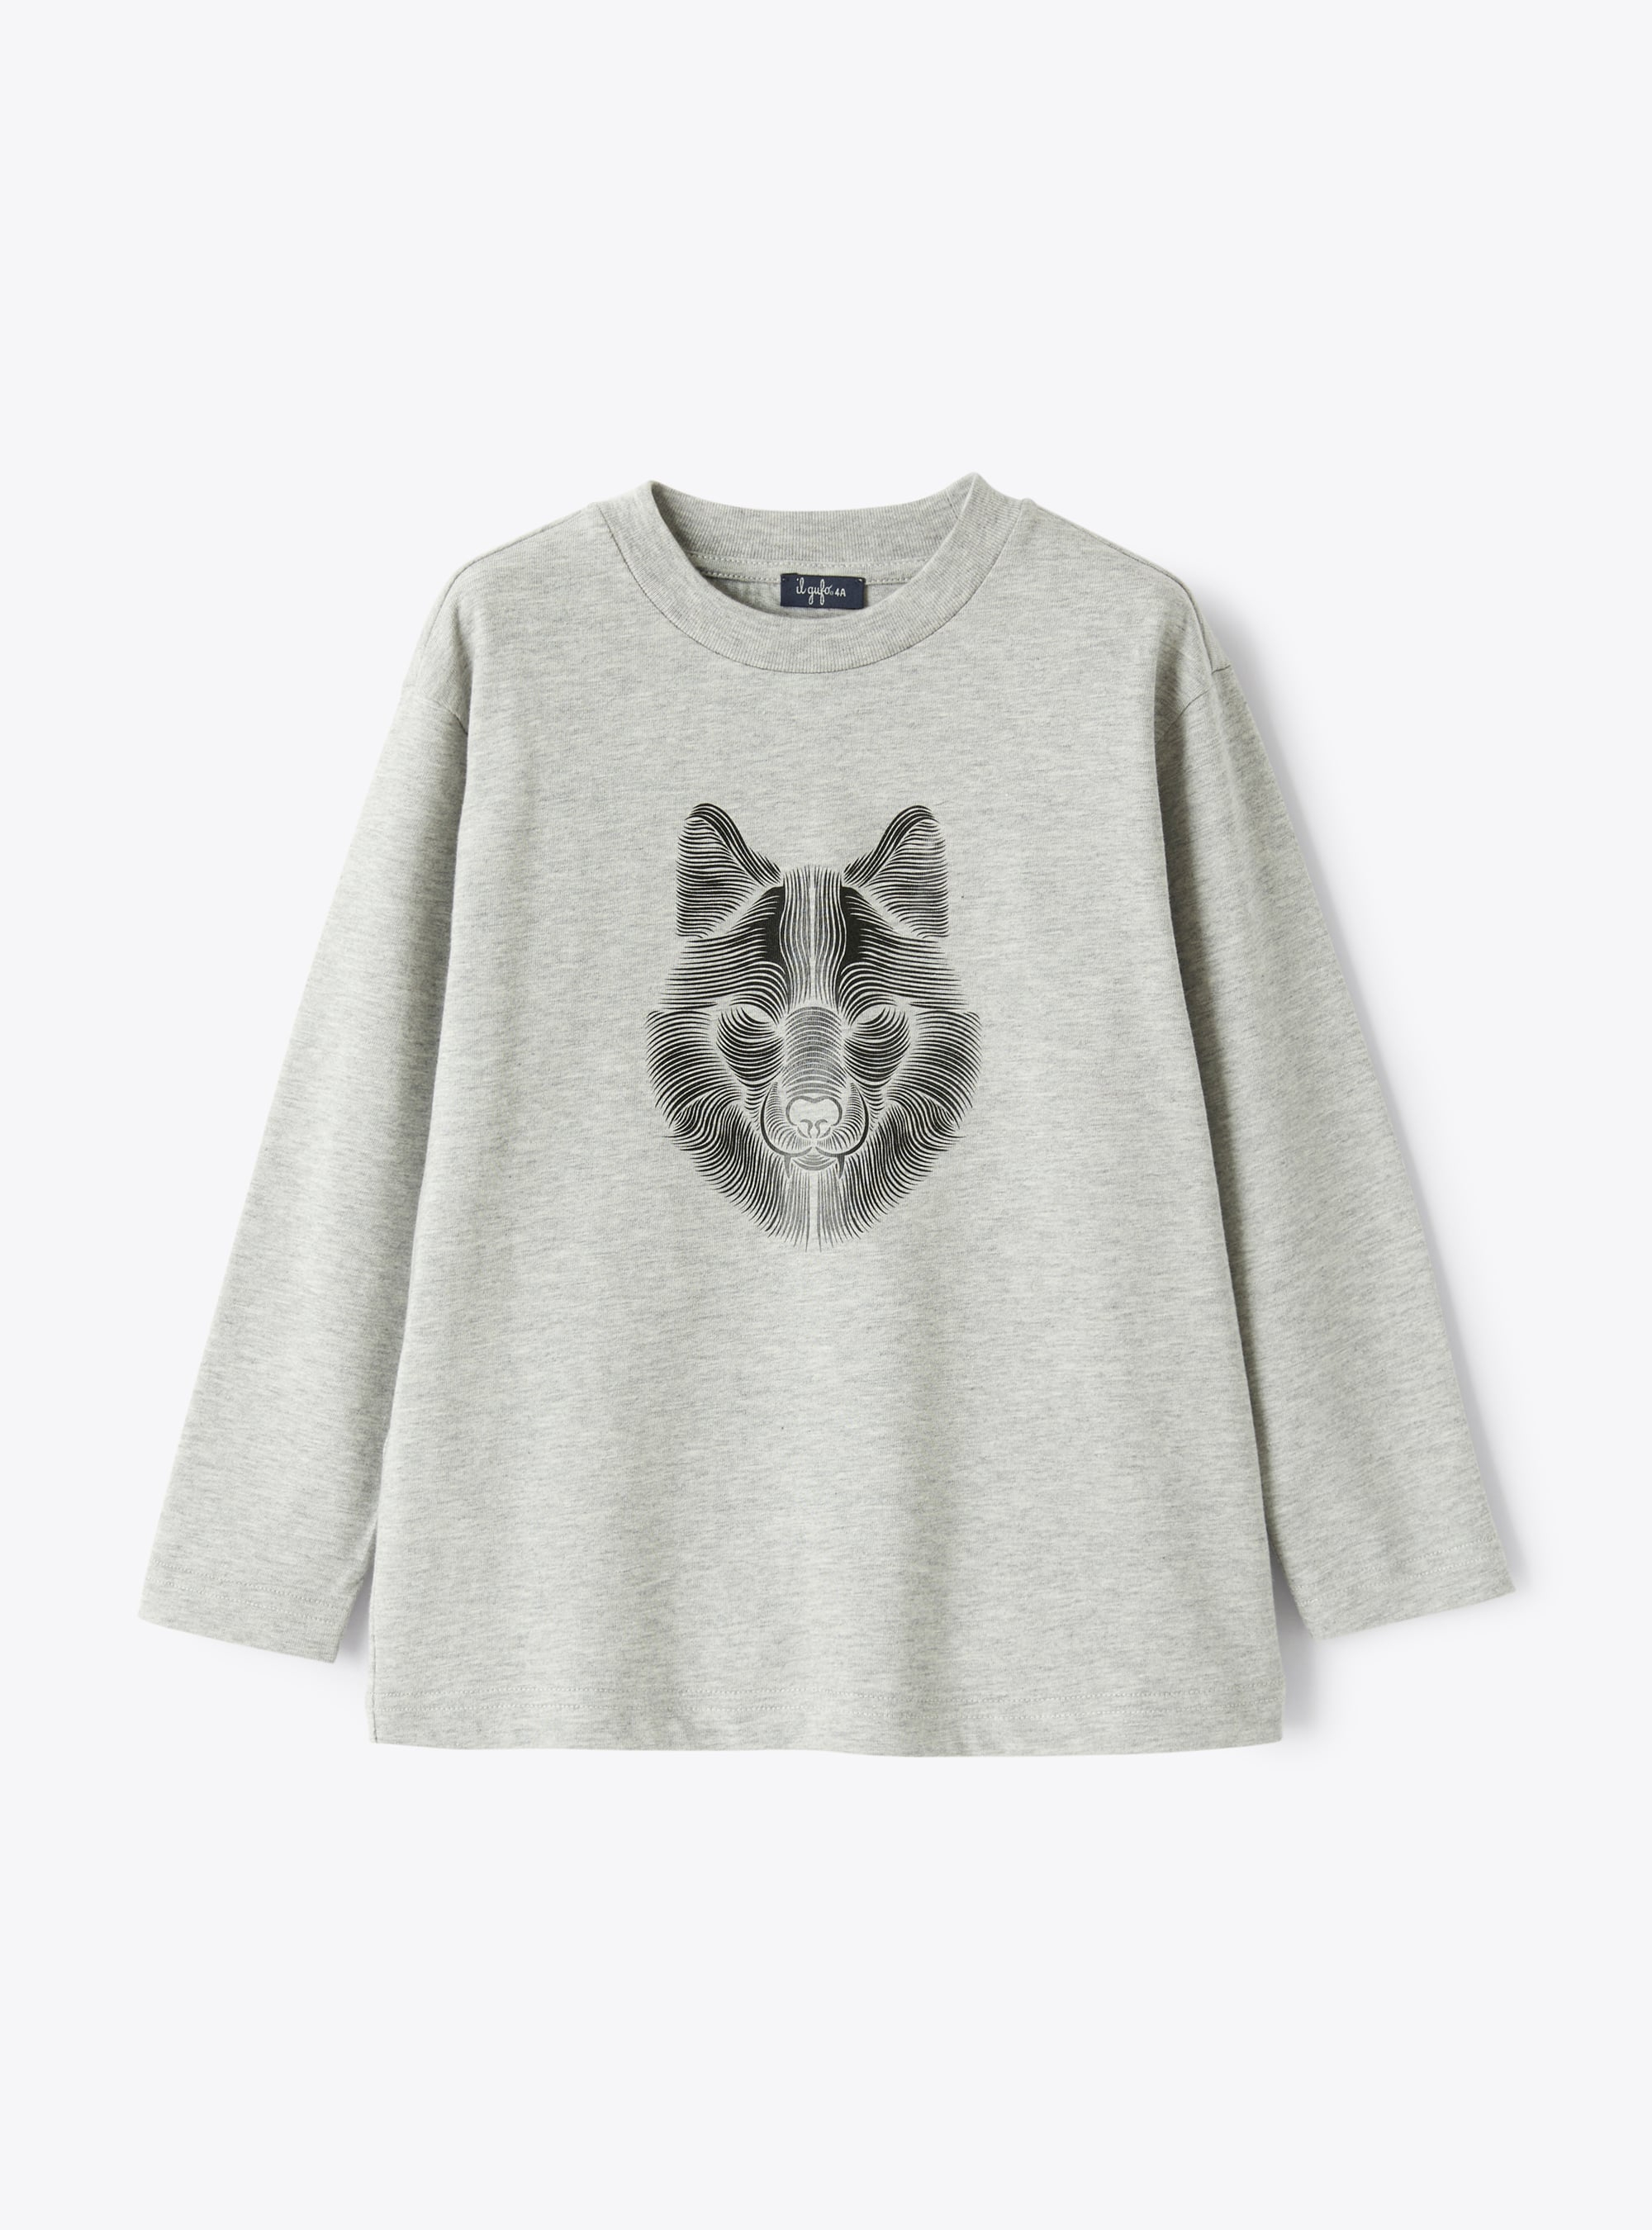 Grey t-shirt with wolf print design - Grey | Il Gufo